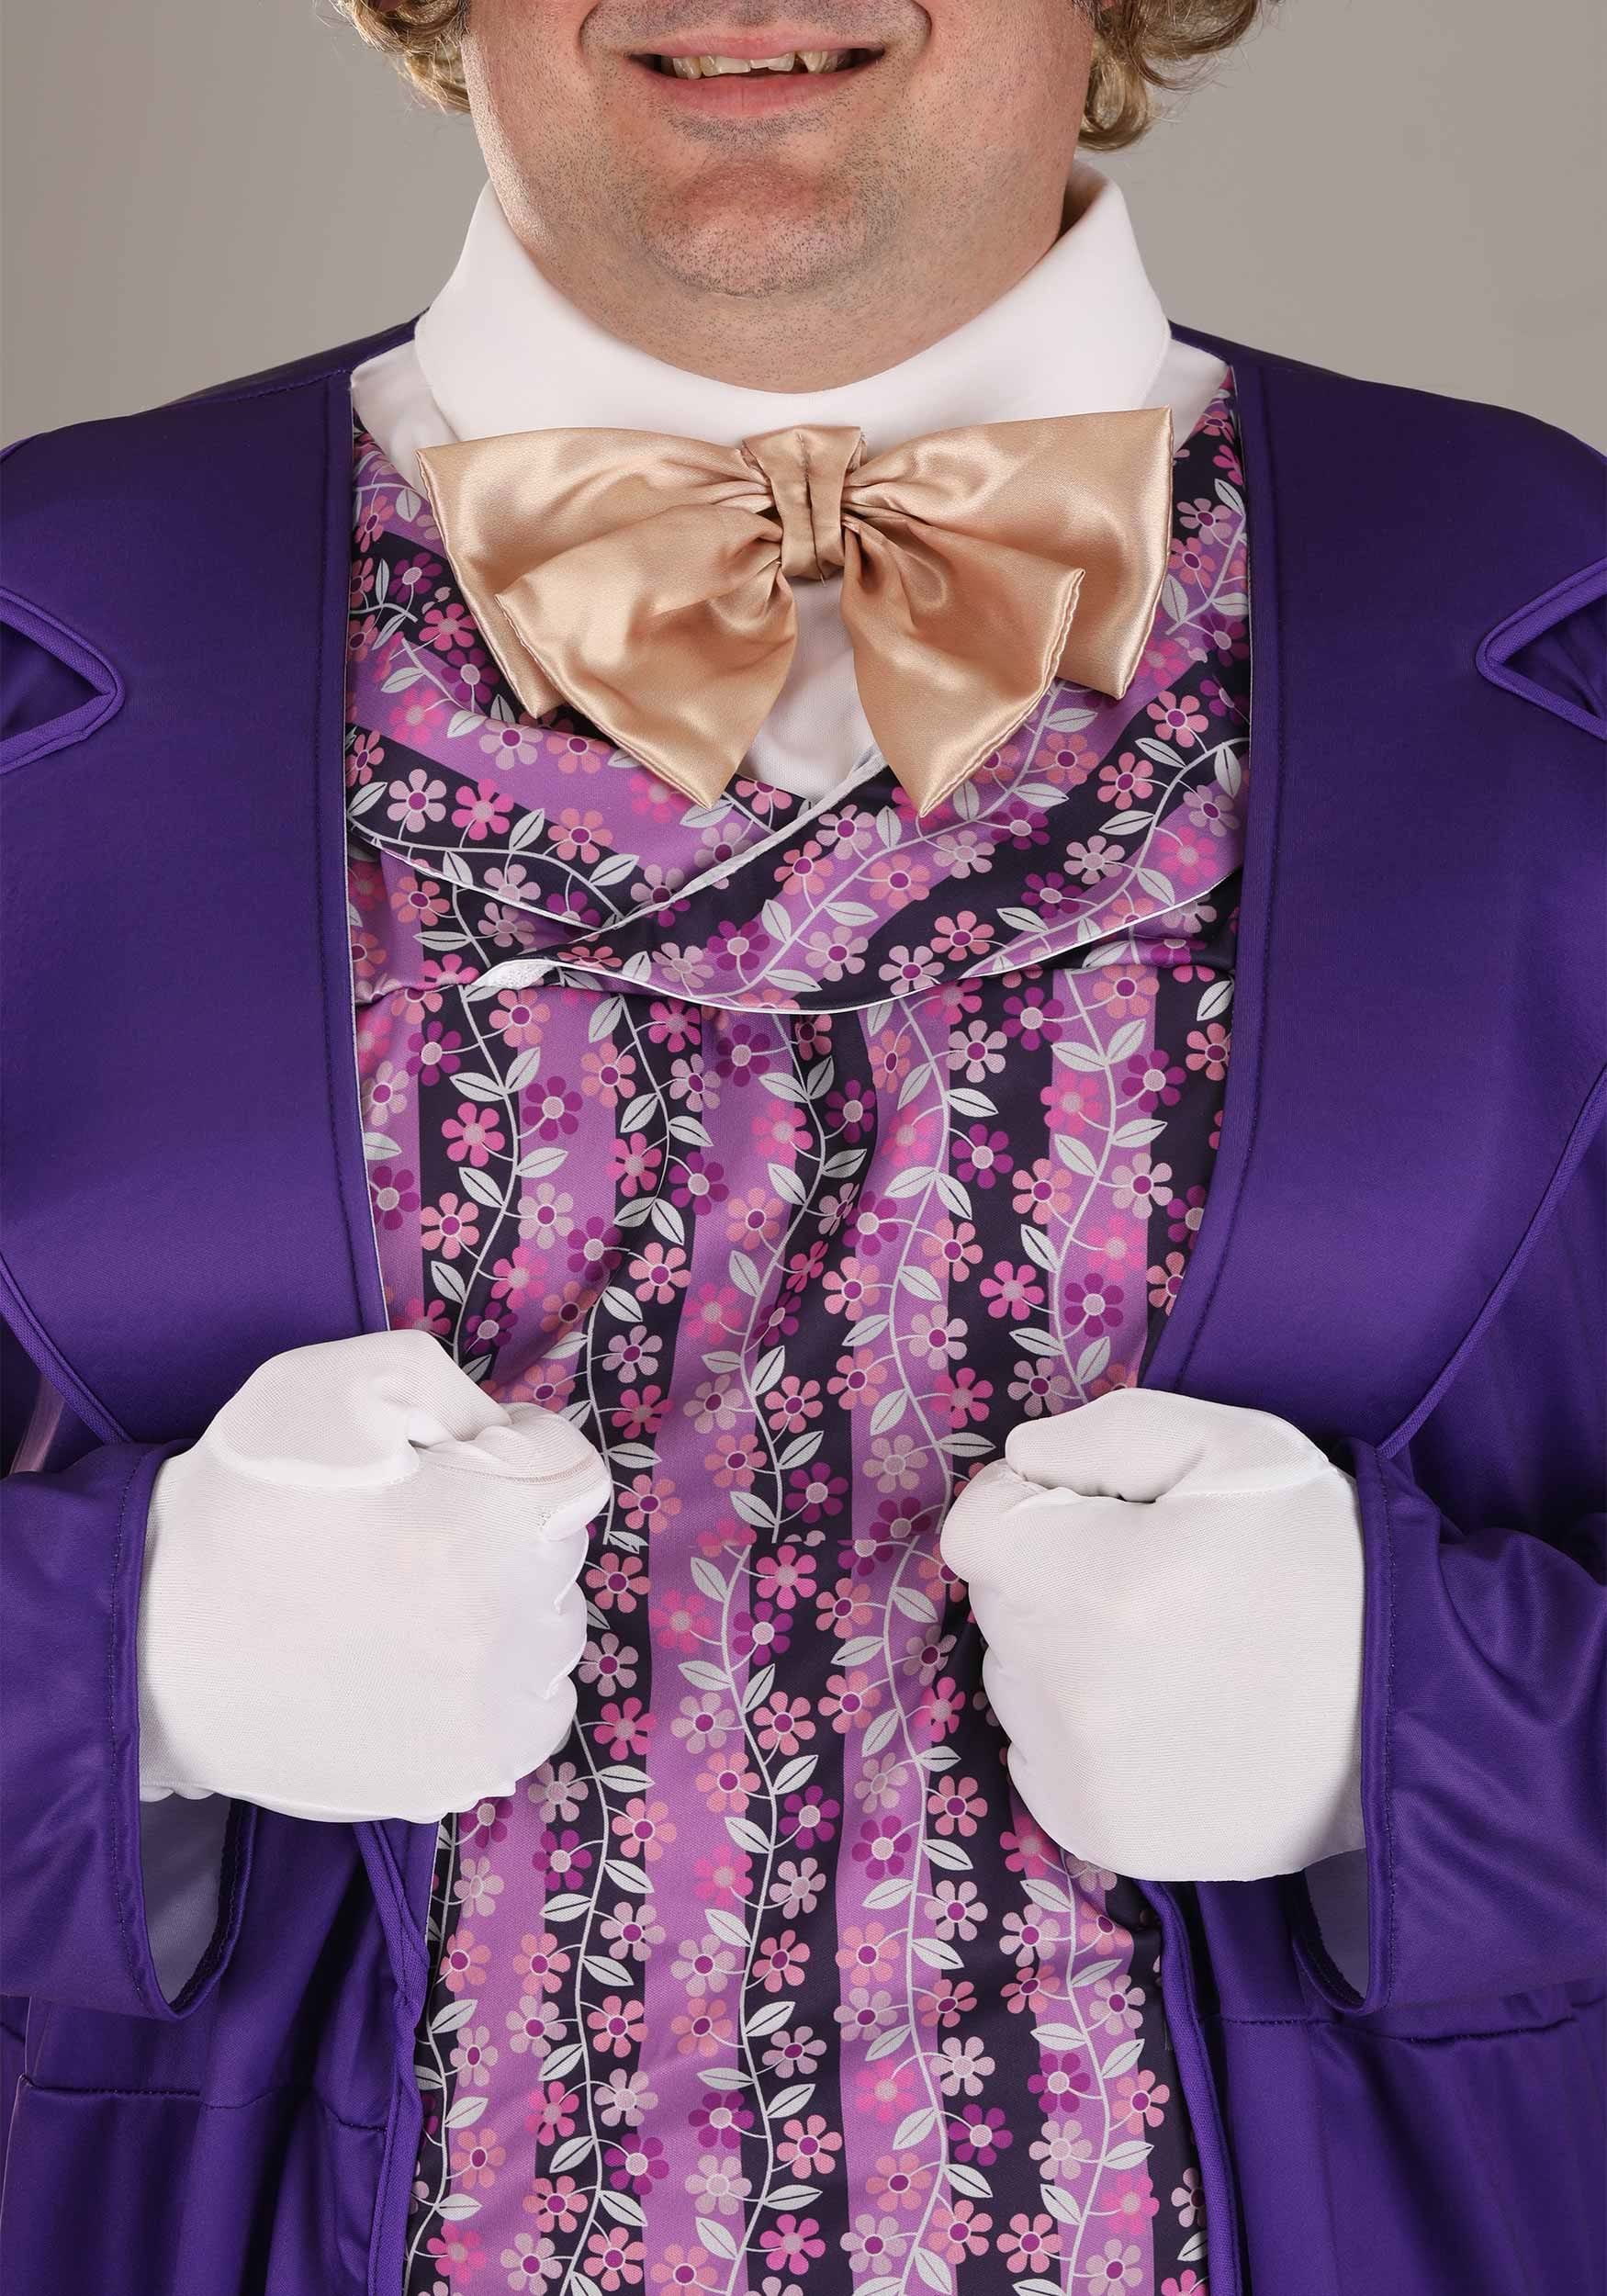 Adult Plus Size Willy Wonka Fancy Dress Costume